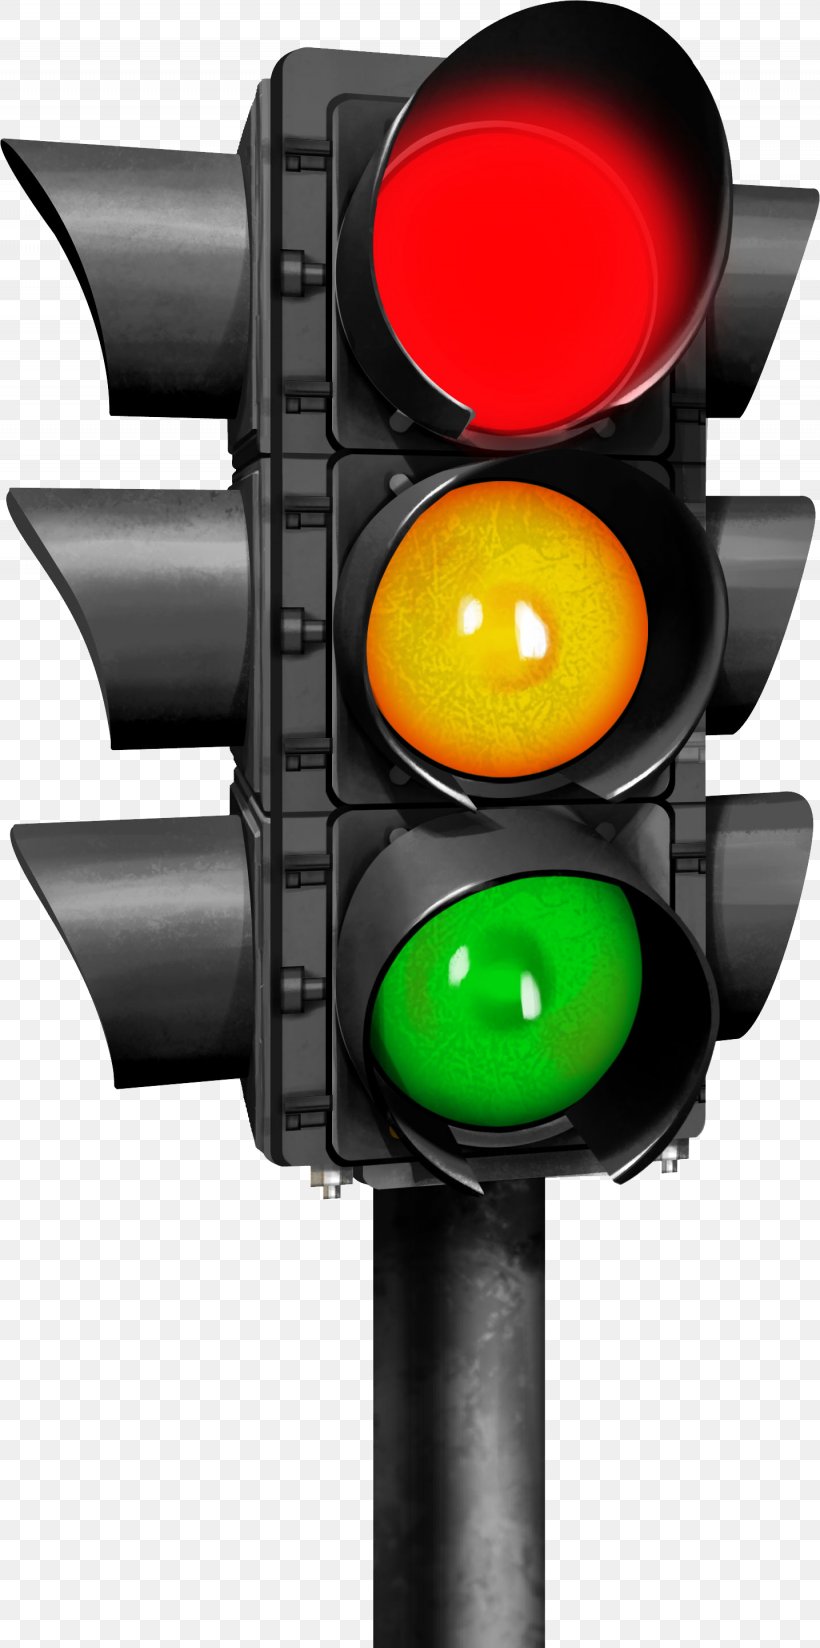 Traffic Light Clip Art Red Light Camera, PNG, 1435x2885px, Traffic Light, Amber, Green, Red, Red Light Camera Download Free